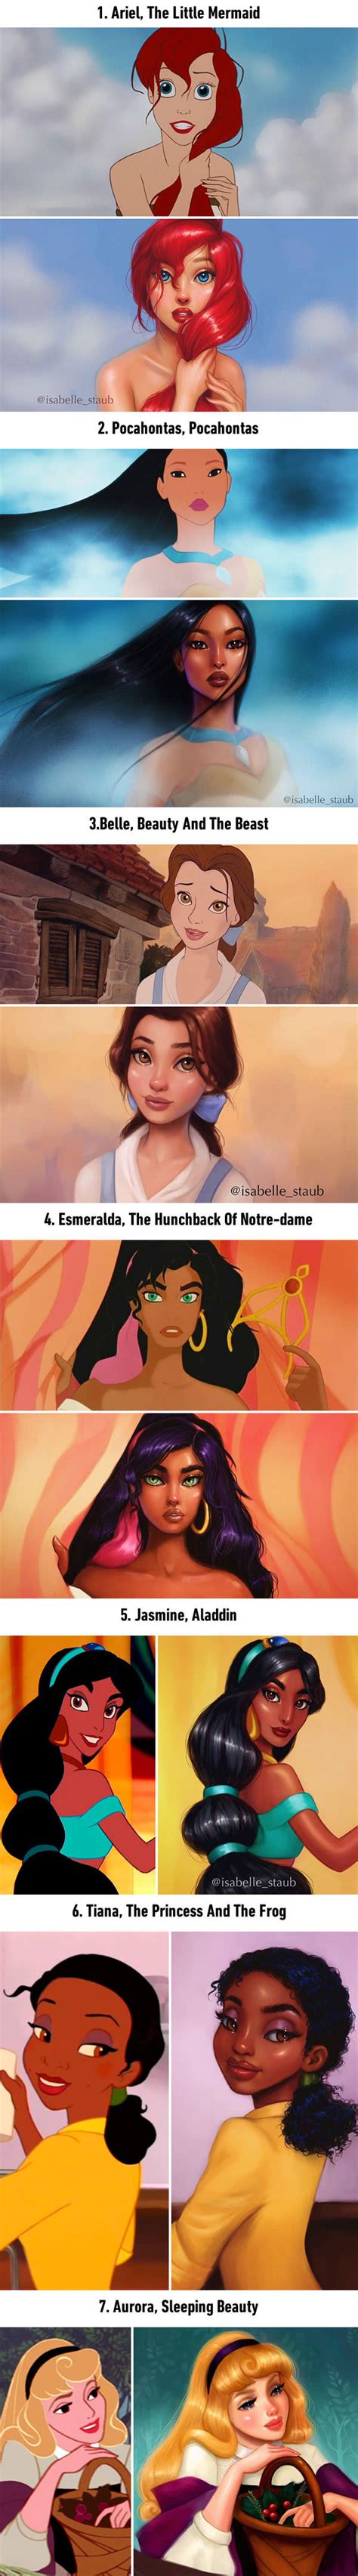 Rampanttv Illustrator Beautifully Reimagines Disney Princesses